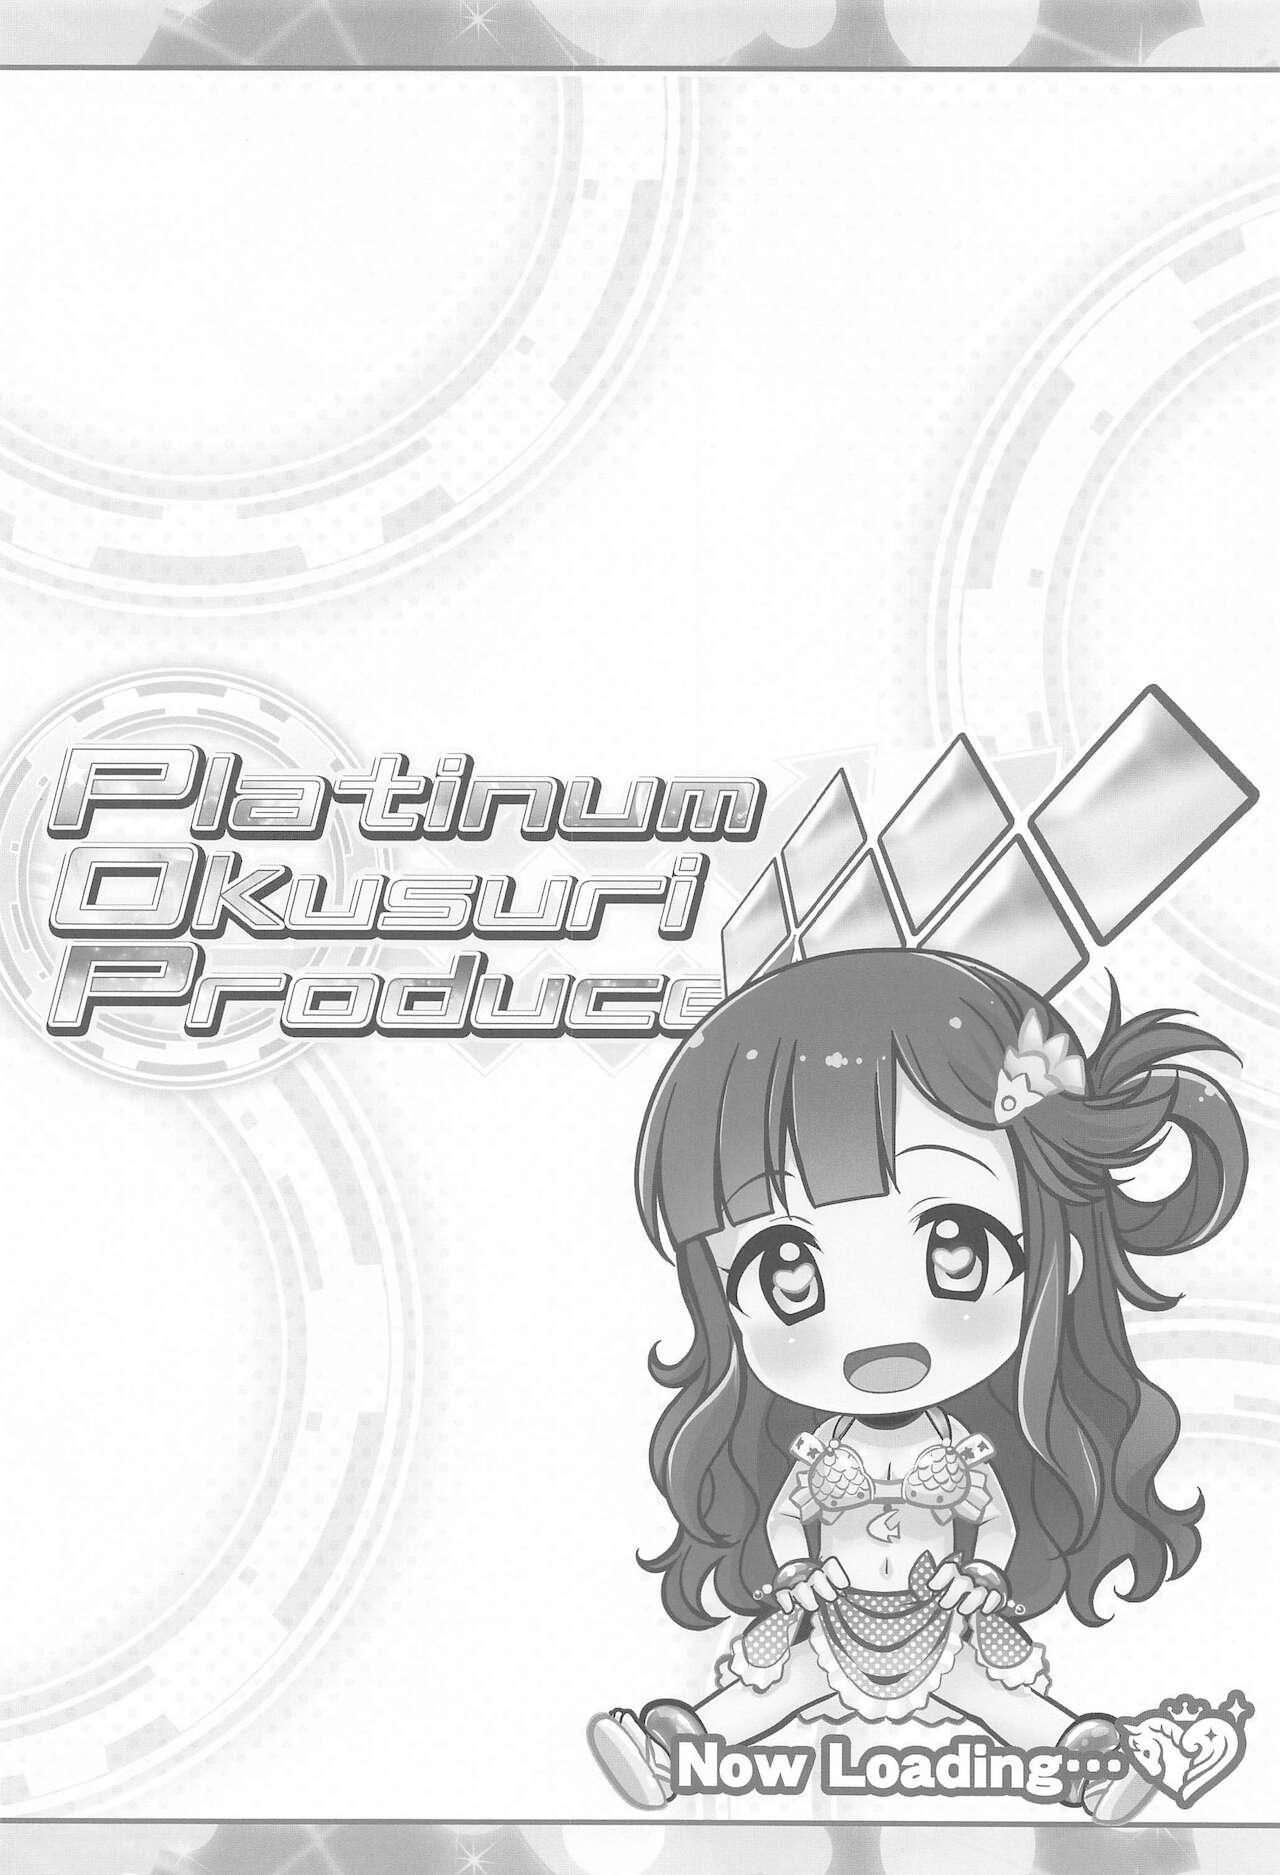 Platinum Okusuri Produce!!!! ◇◇◇◇◇◇ 2